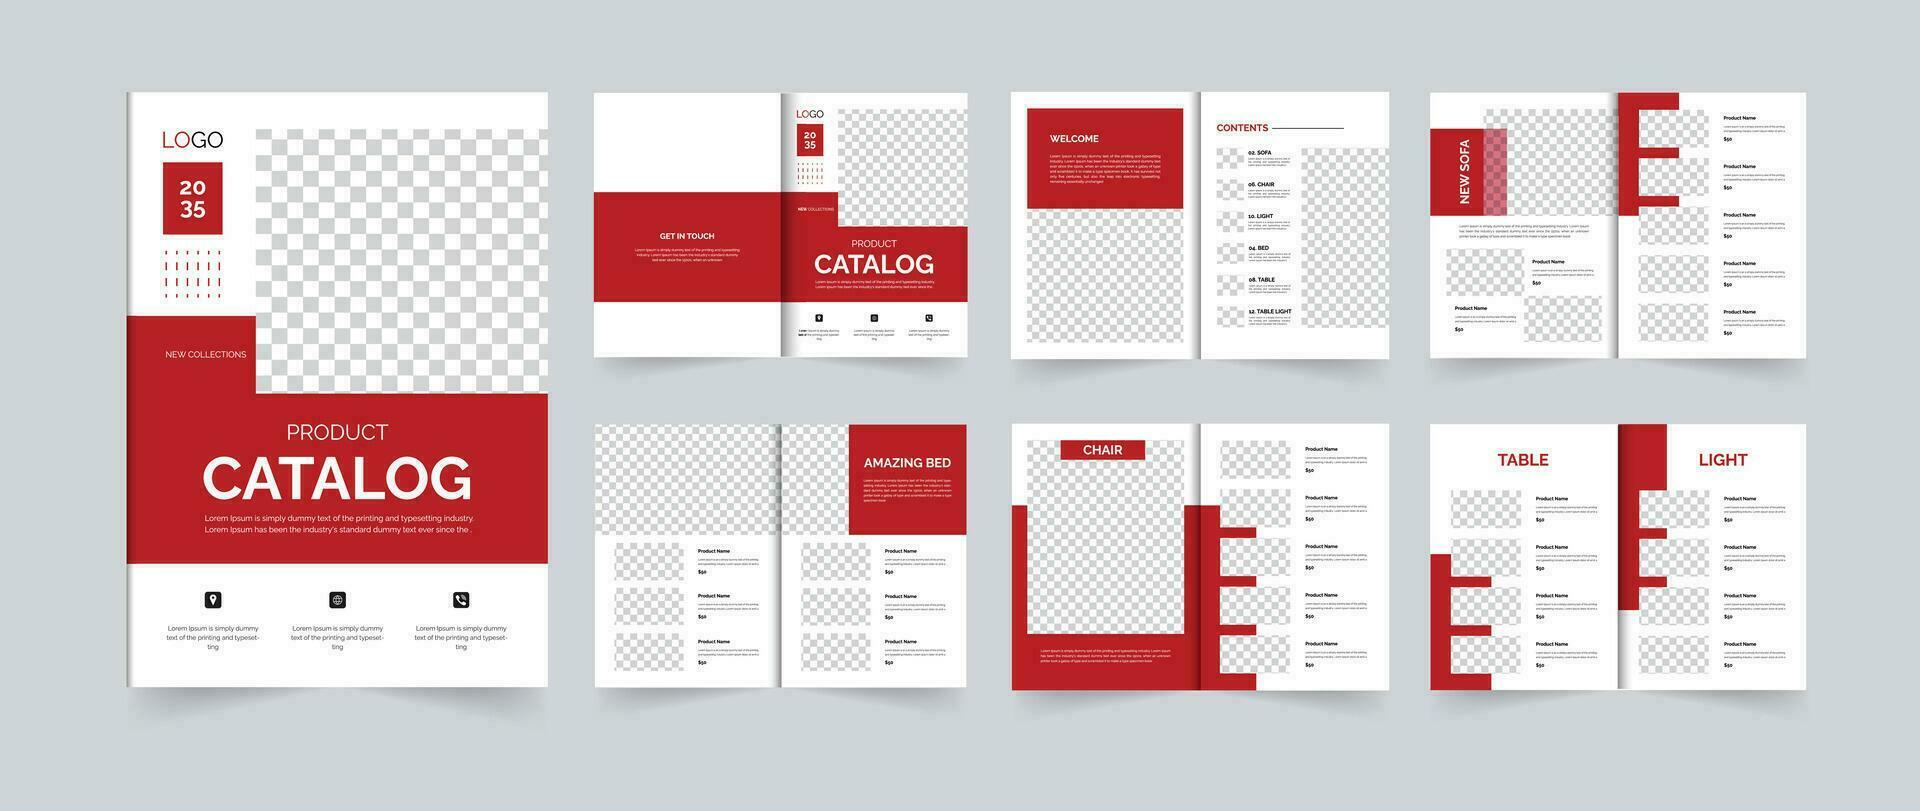 Product catalog design template Company catalog or furniture catalog vector